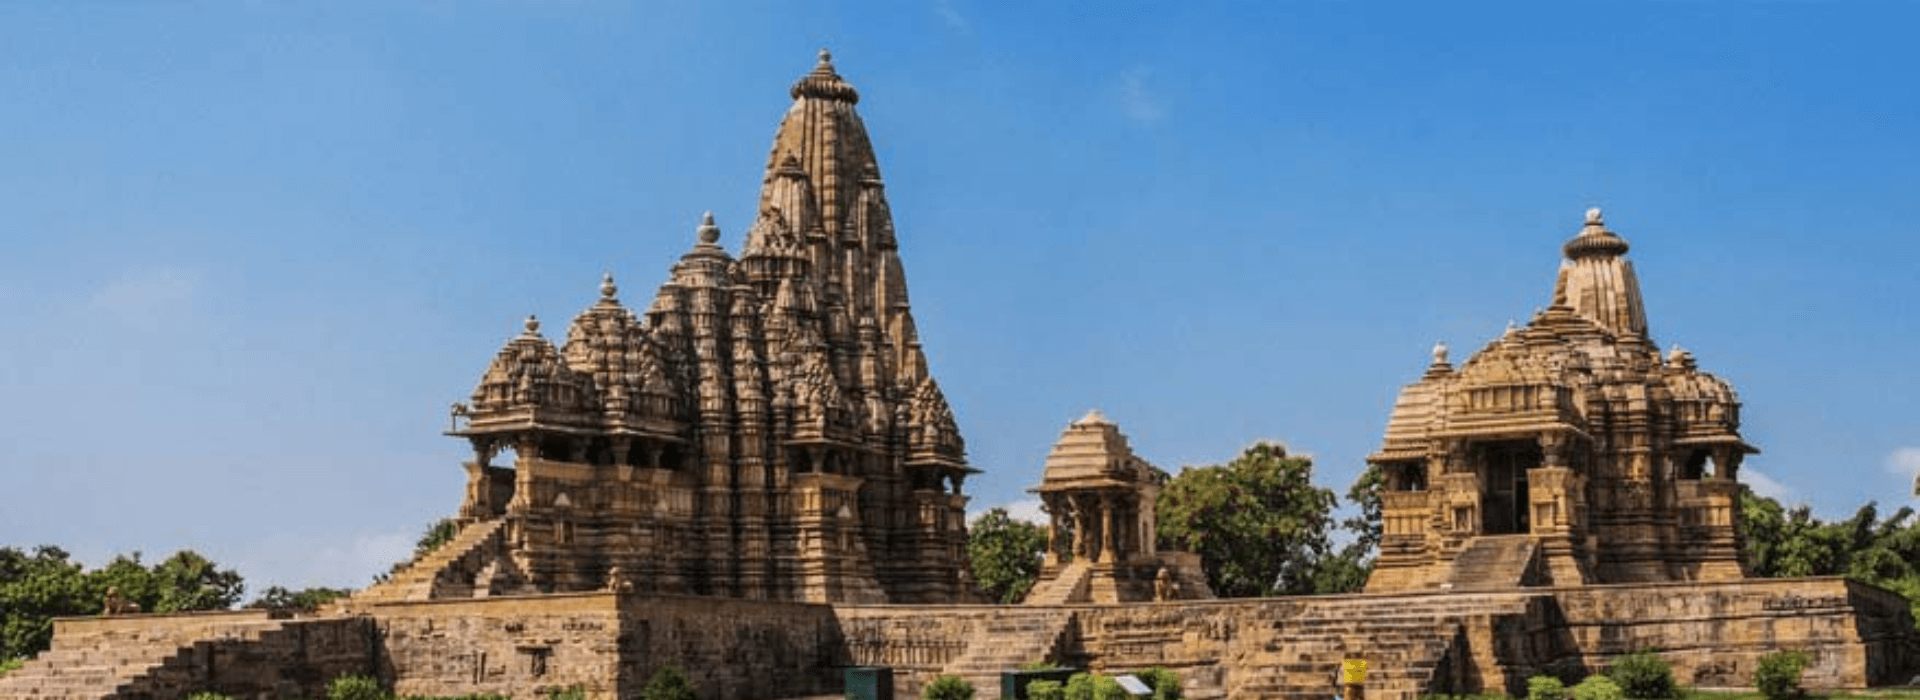 Best Of Rajasthan India With Temple Of Khajuraho And Varanasi